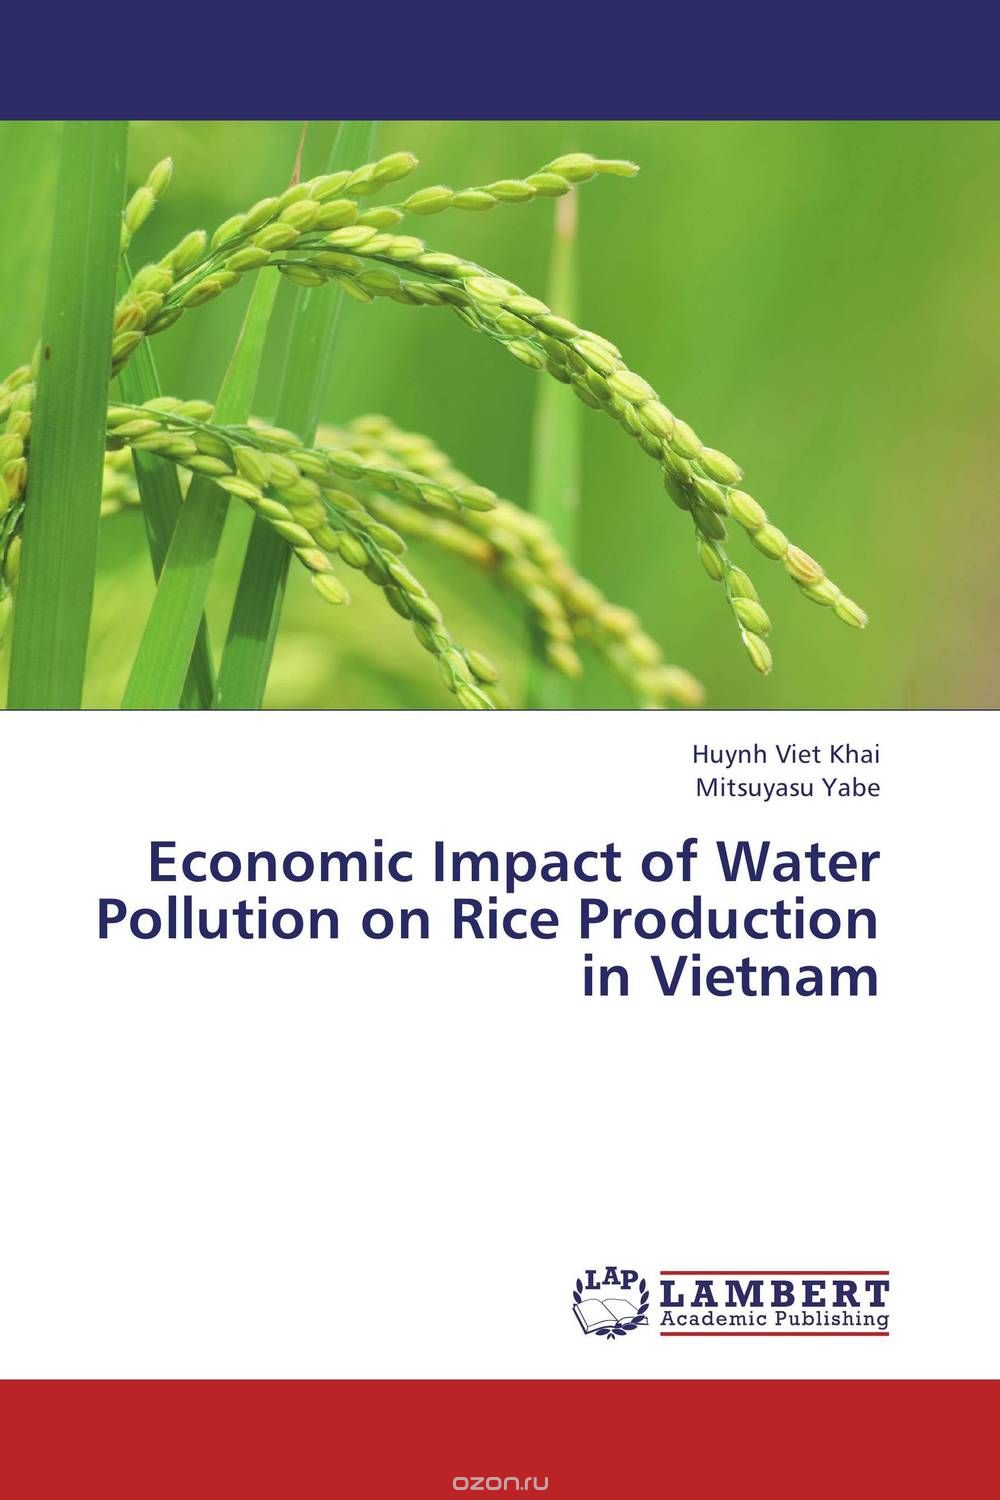 Скачать книгу "Economic Impact of Water Pollution on Rice Production in Vietnam"